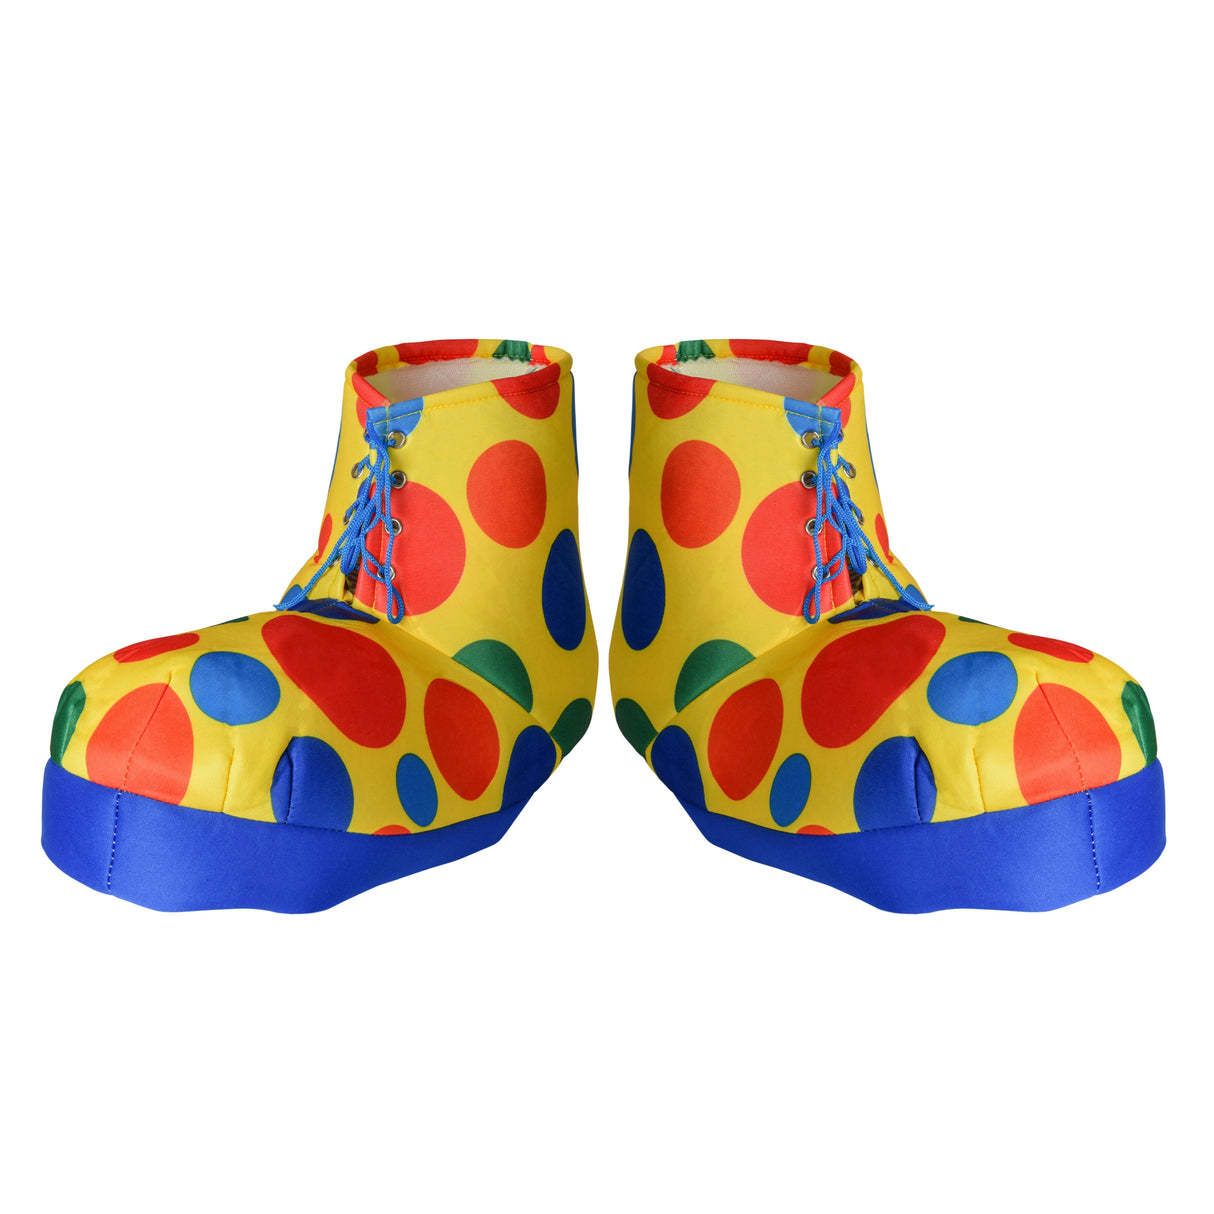 Clown Polka Dot Shoe Covers